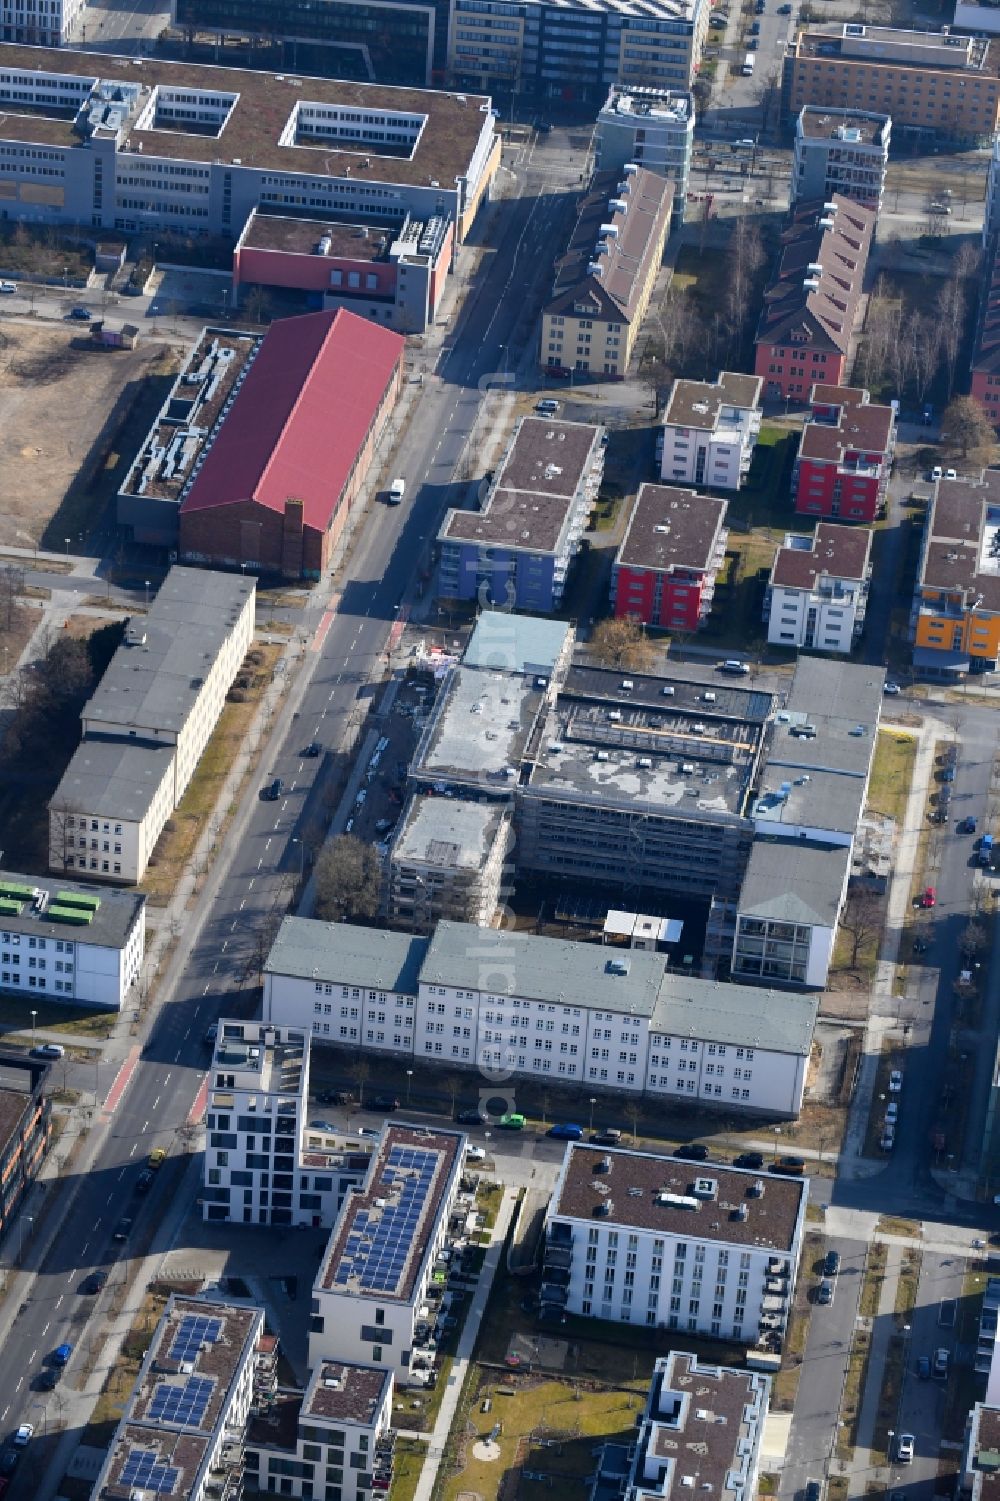 Aerial photograph Berlin - Construction site for the new building IRIS Adlershof Zum Grossen Windkanal in the district Adlershof in Berlin, Germany